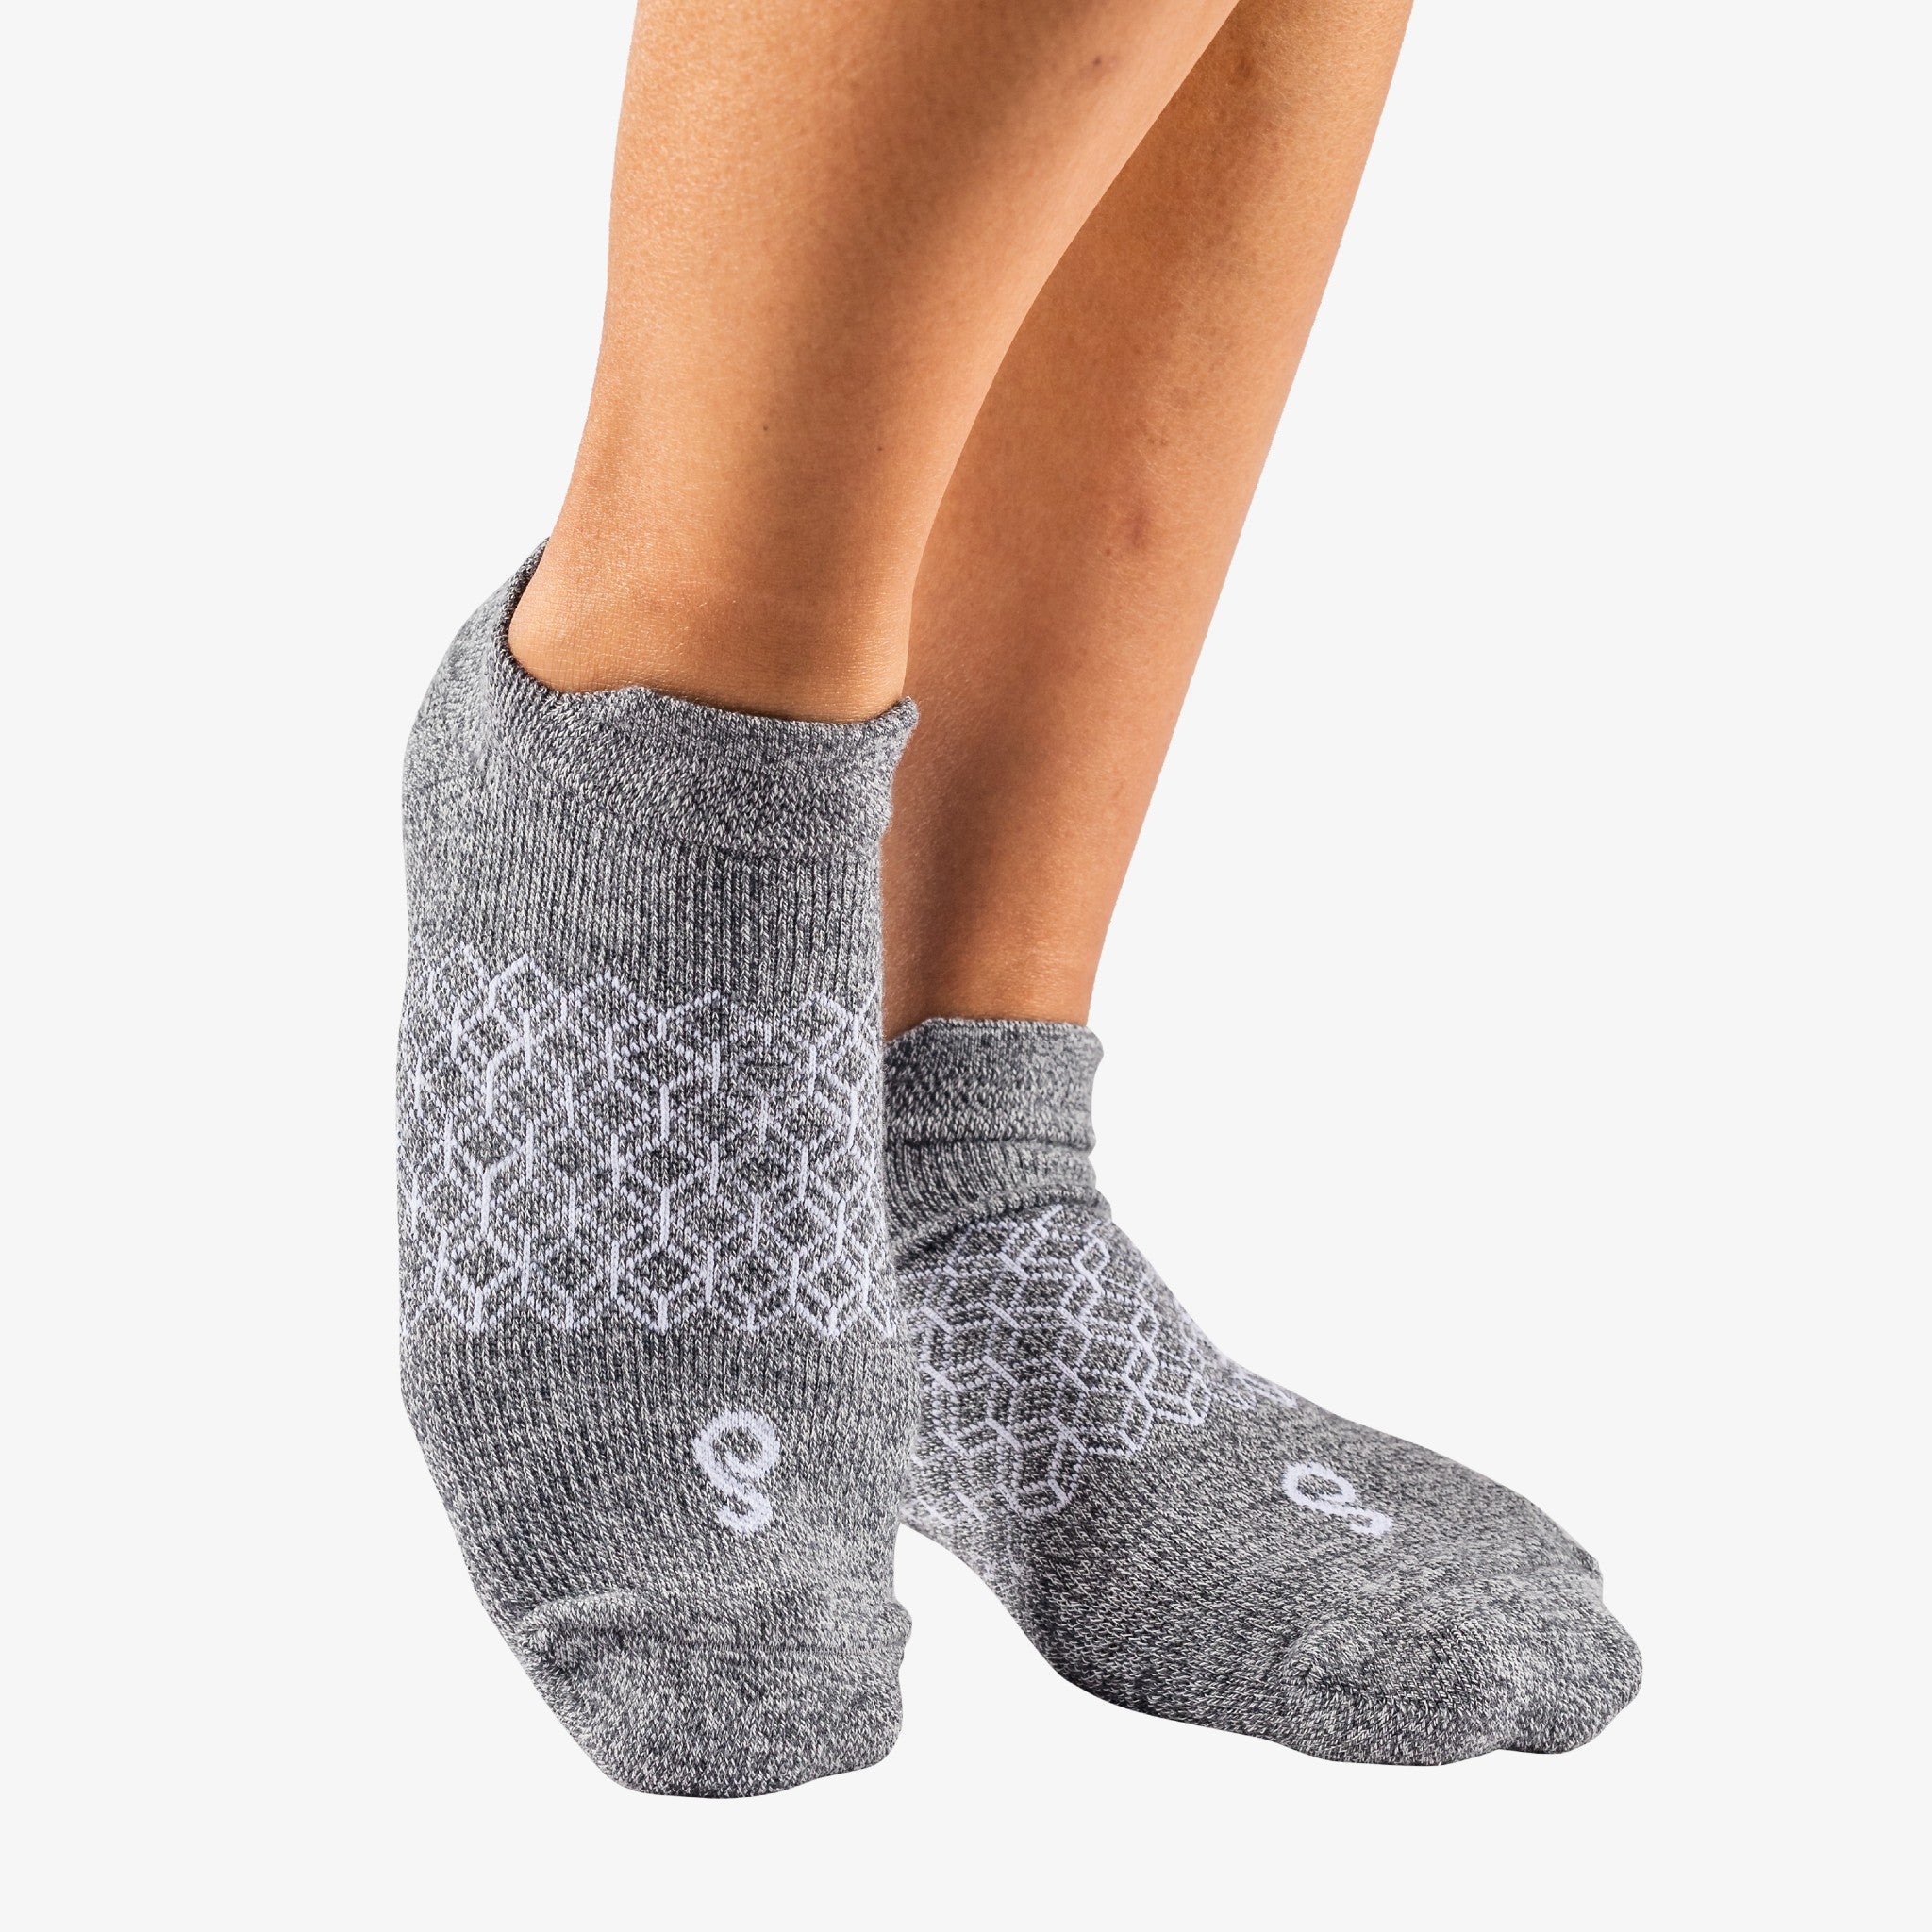 Product picture of dash - merino wool trainer socks